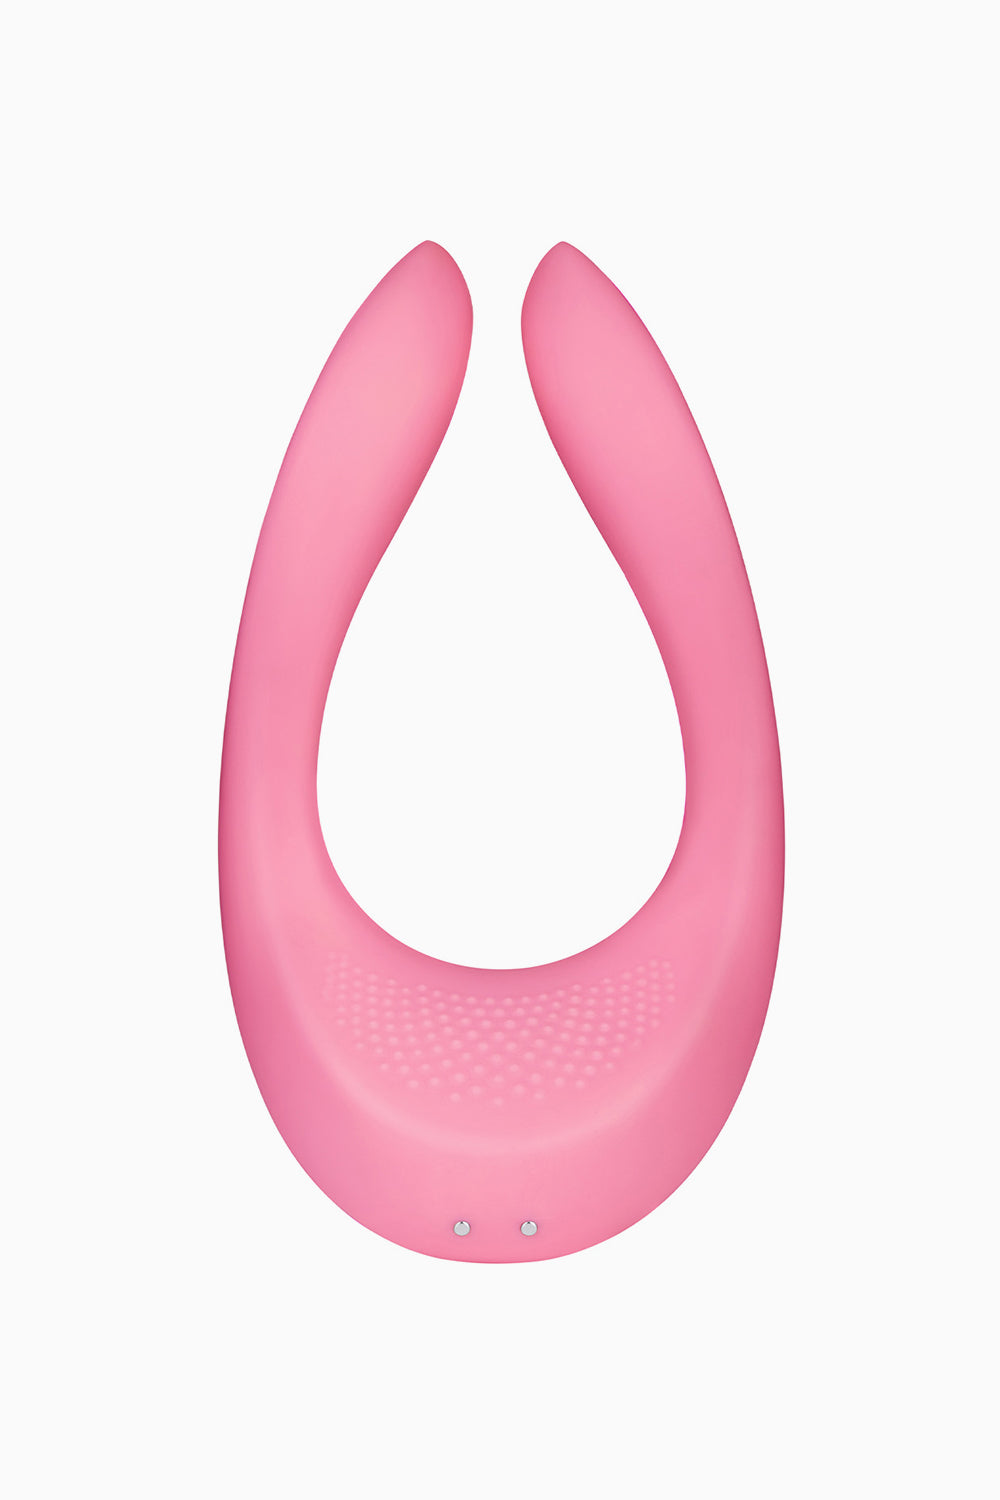 Satisfyer Endless Joy Multi Vibrator Pink, 5 Inches